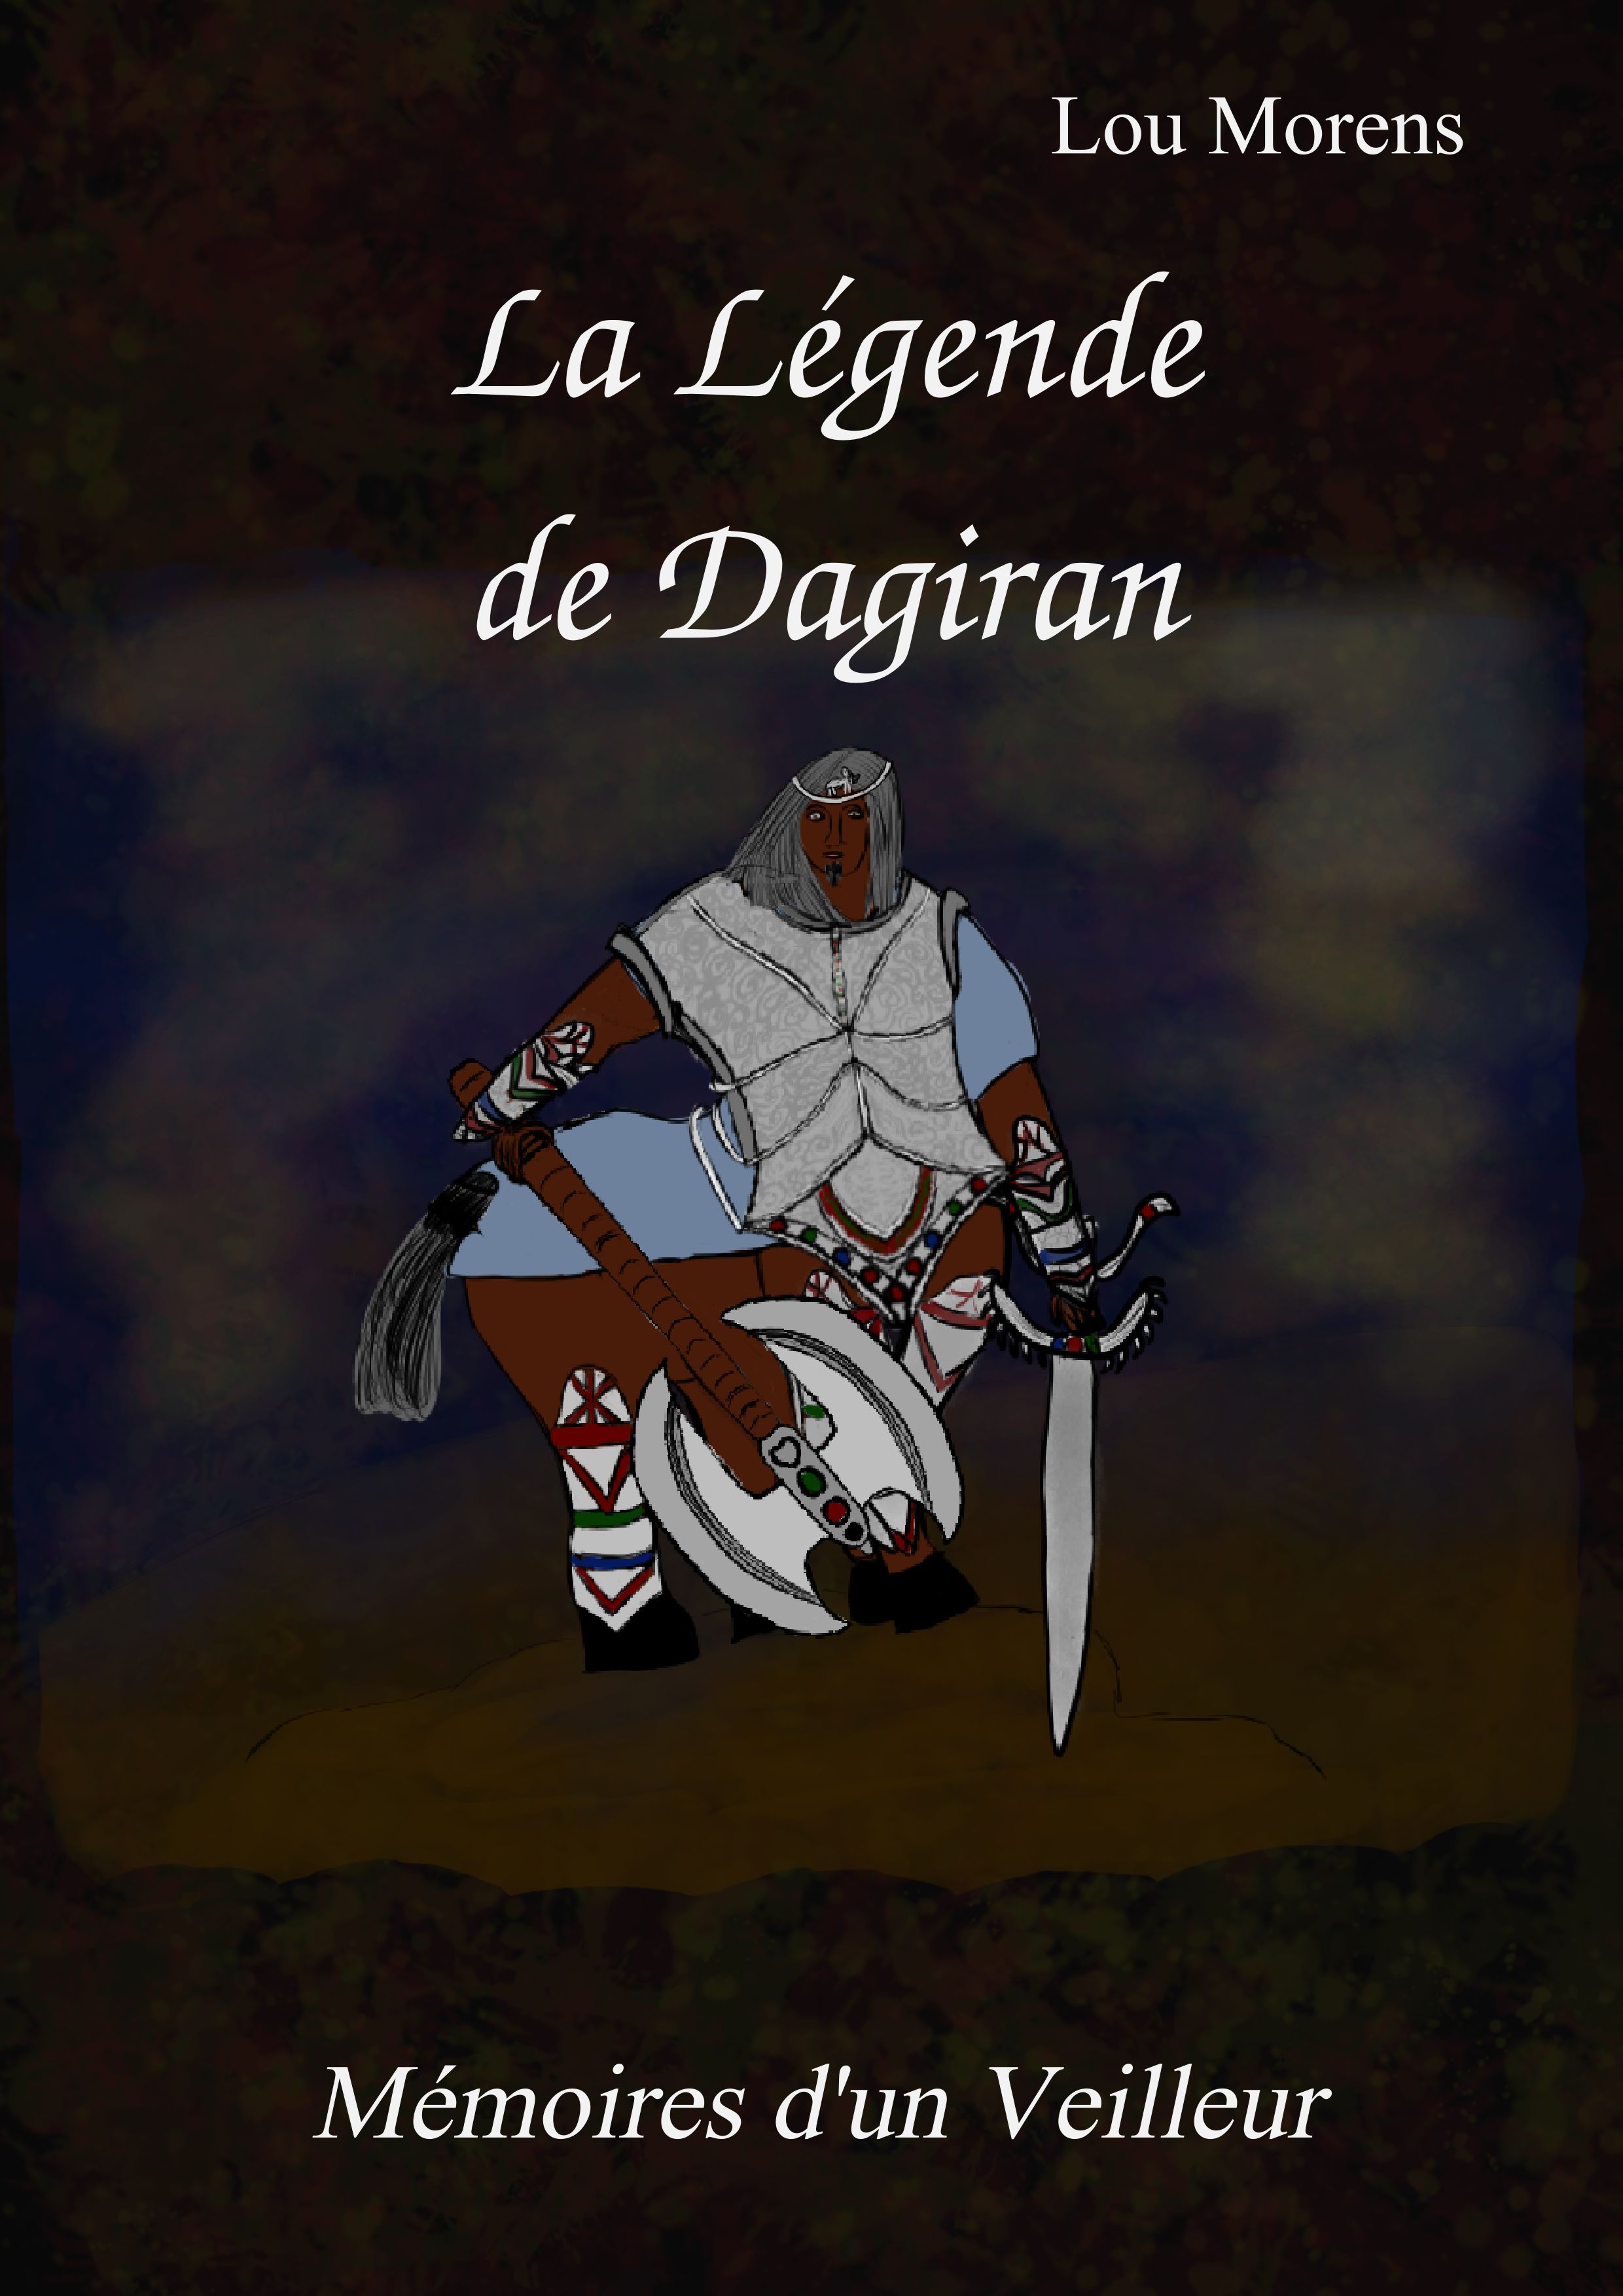 Legend of Dagiran button